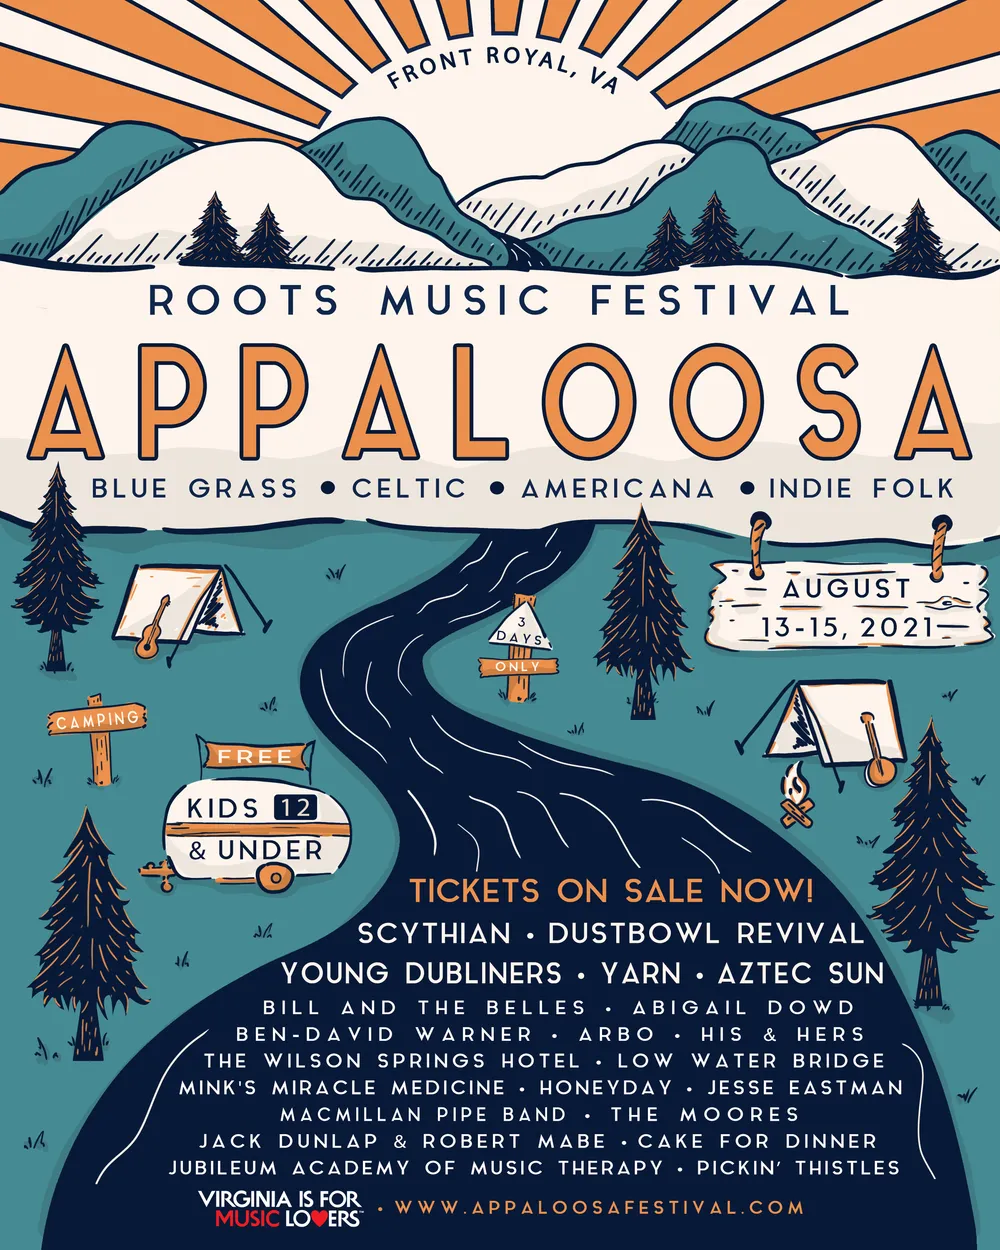 Appaloosa Roots Music Festival